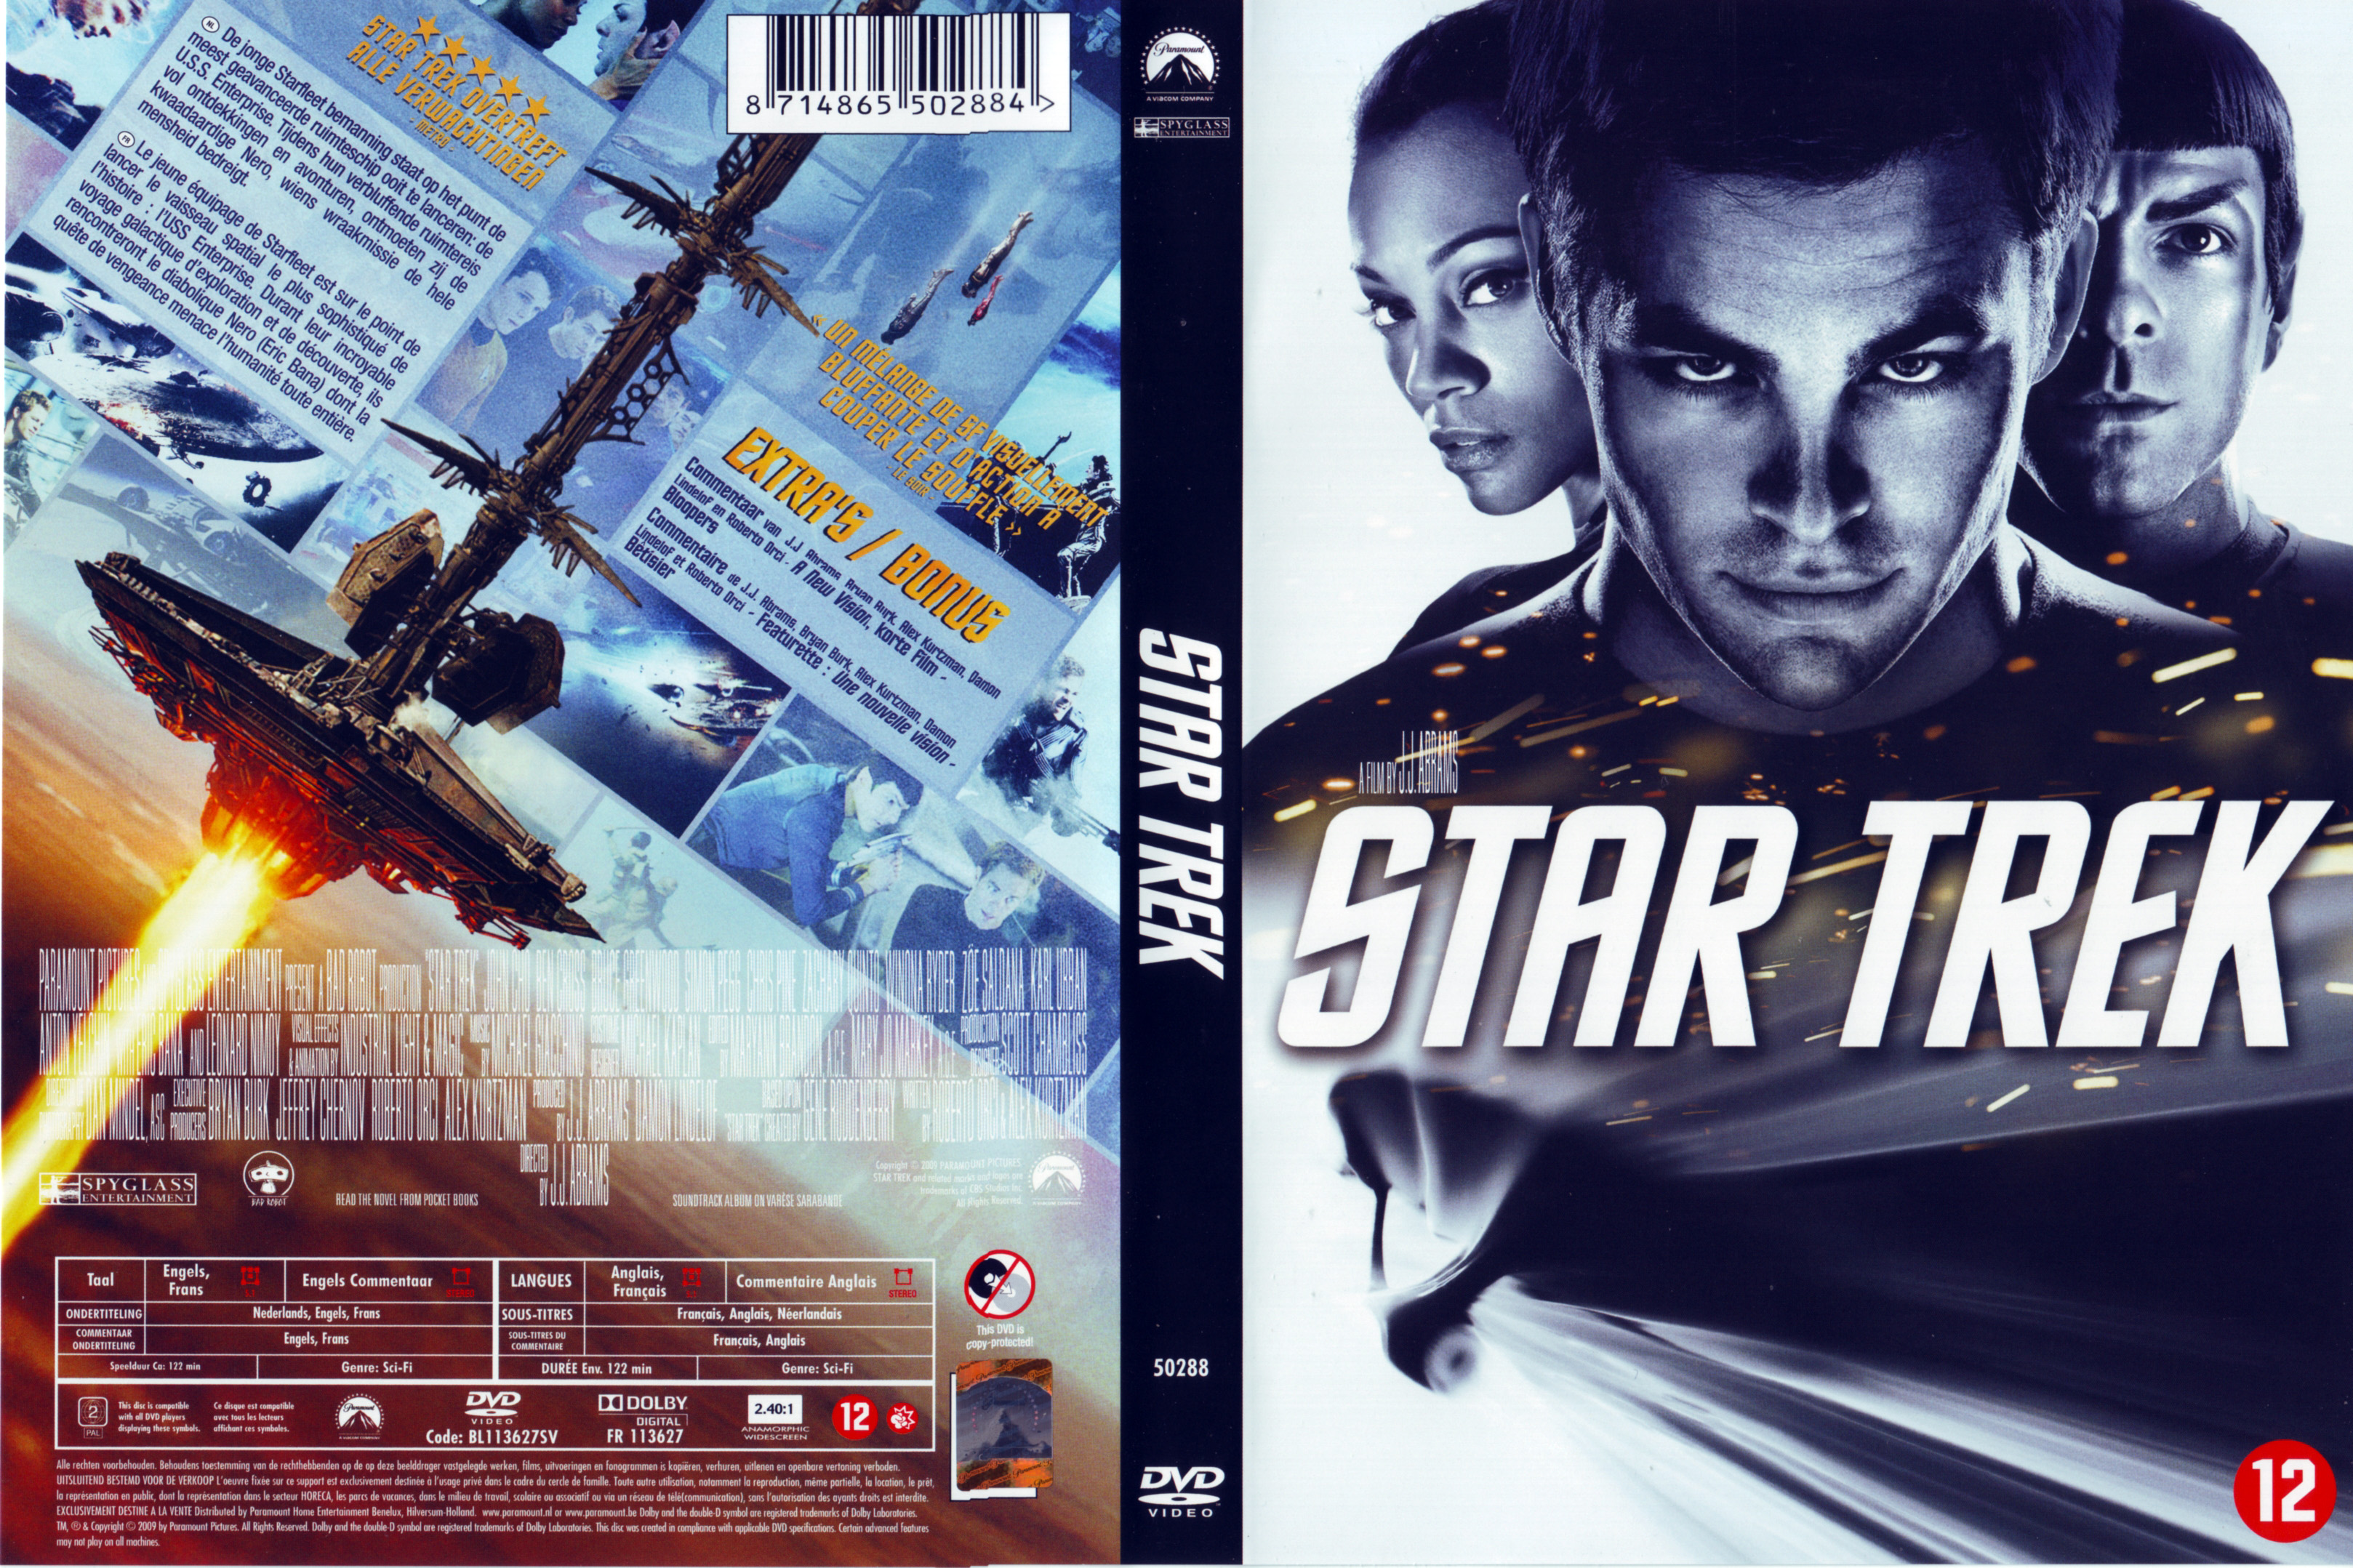 Jaquette DVD Star trek (2009) v3